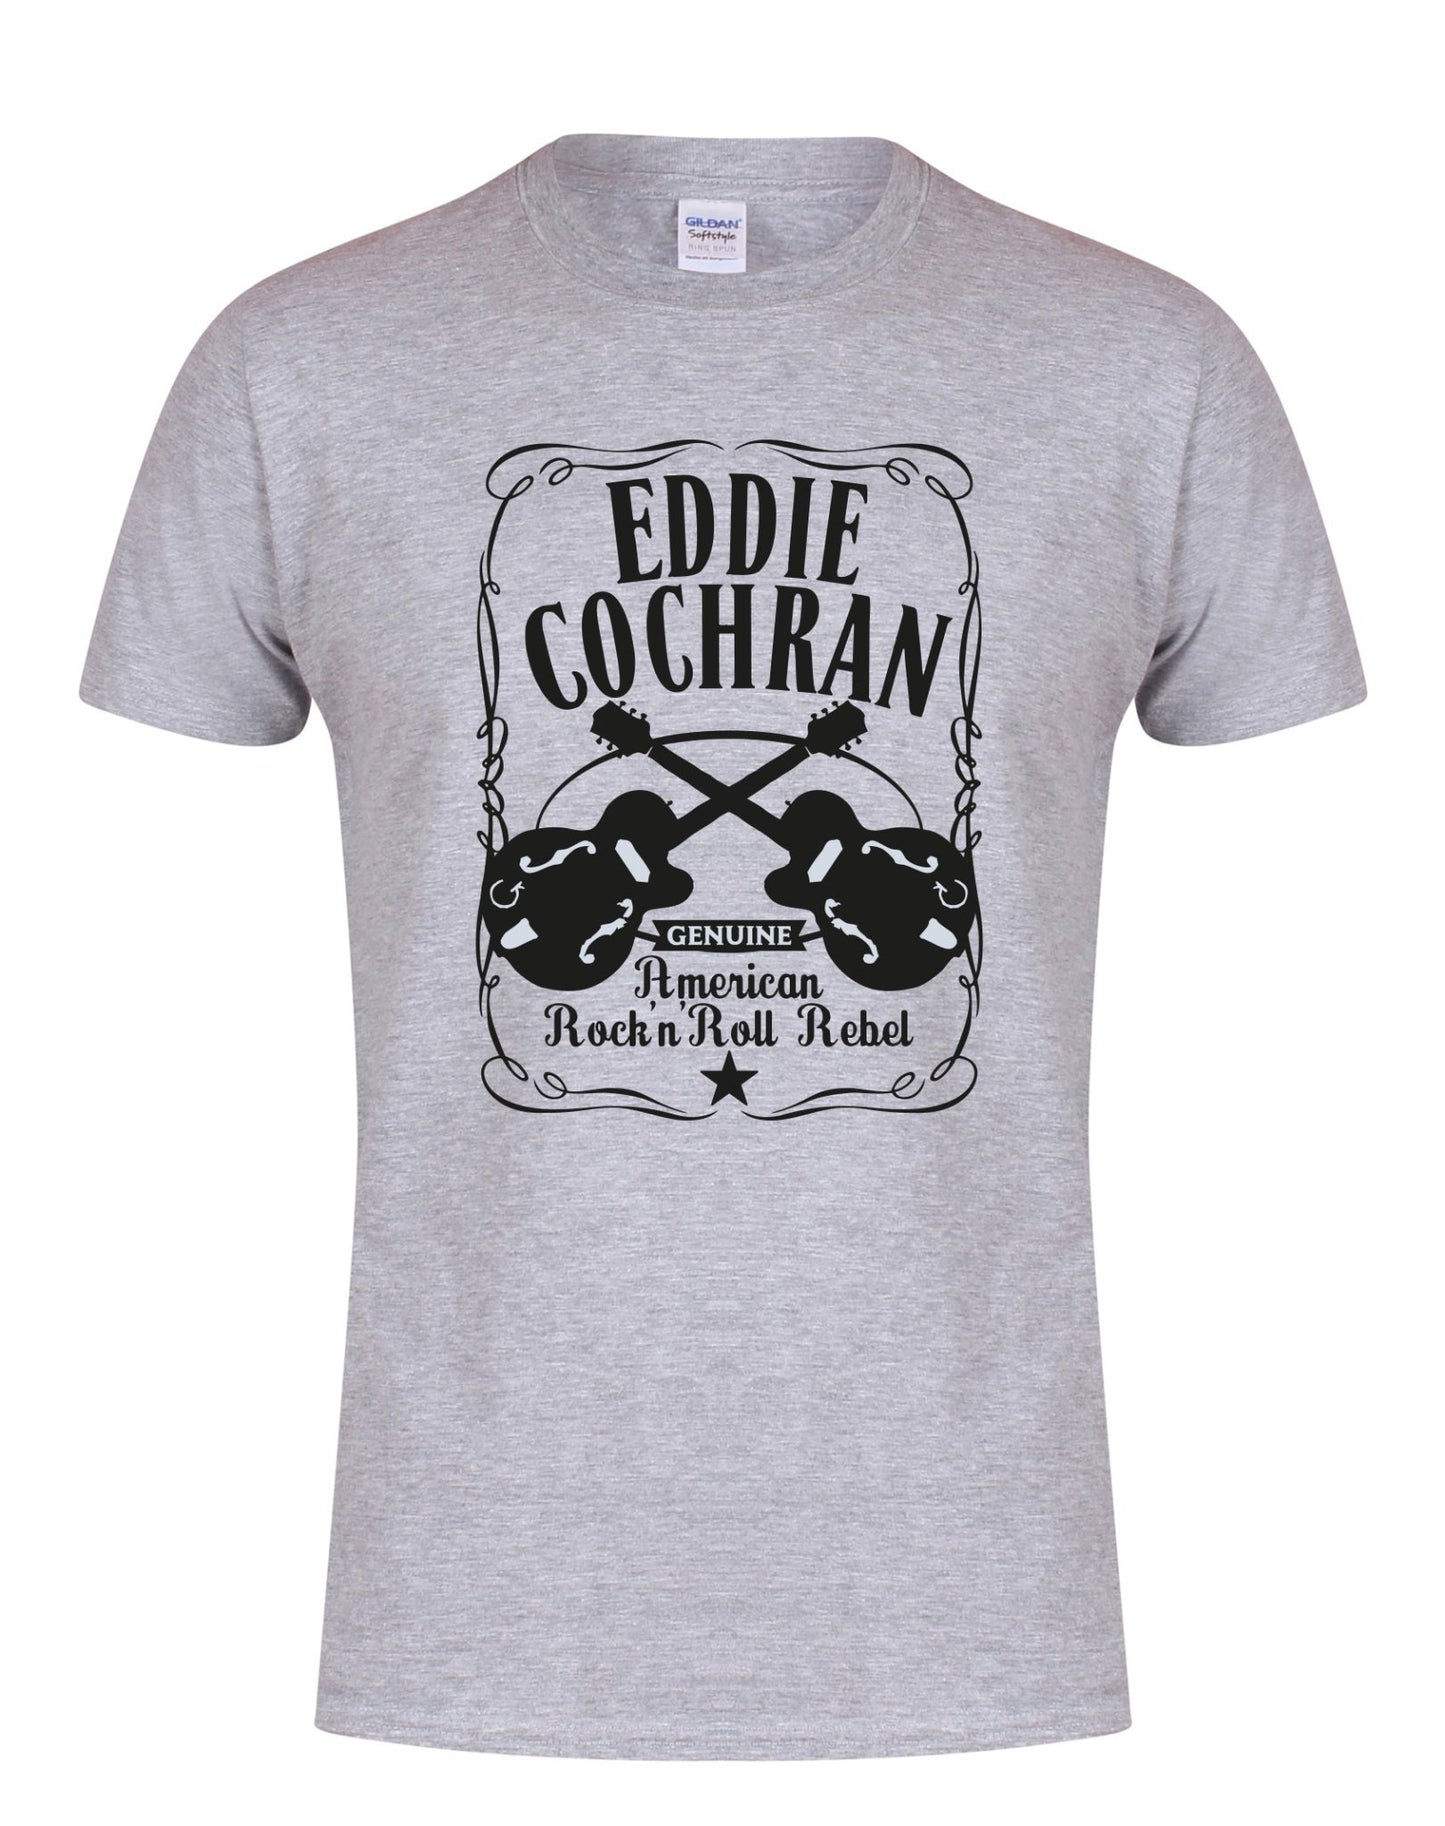 Eddie Cochran - Cross Gretsch guitars unisex fit T-shirt - various colours - Dirty Stop Outs